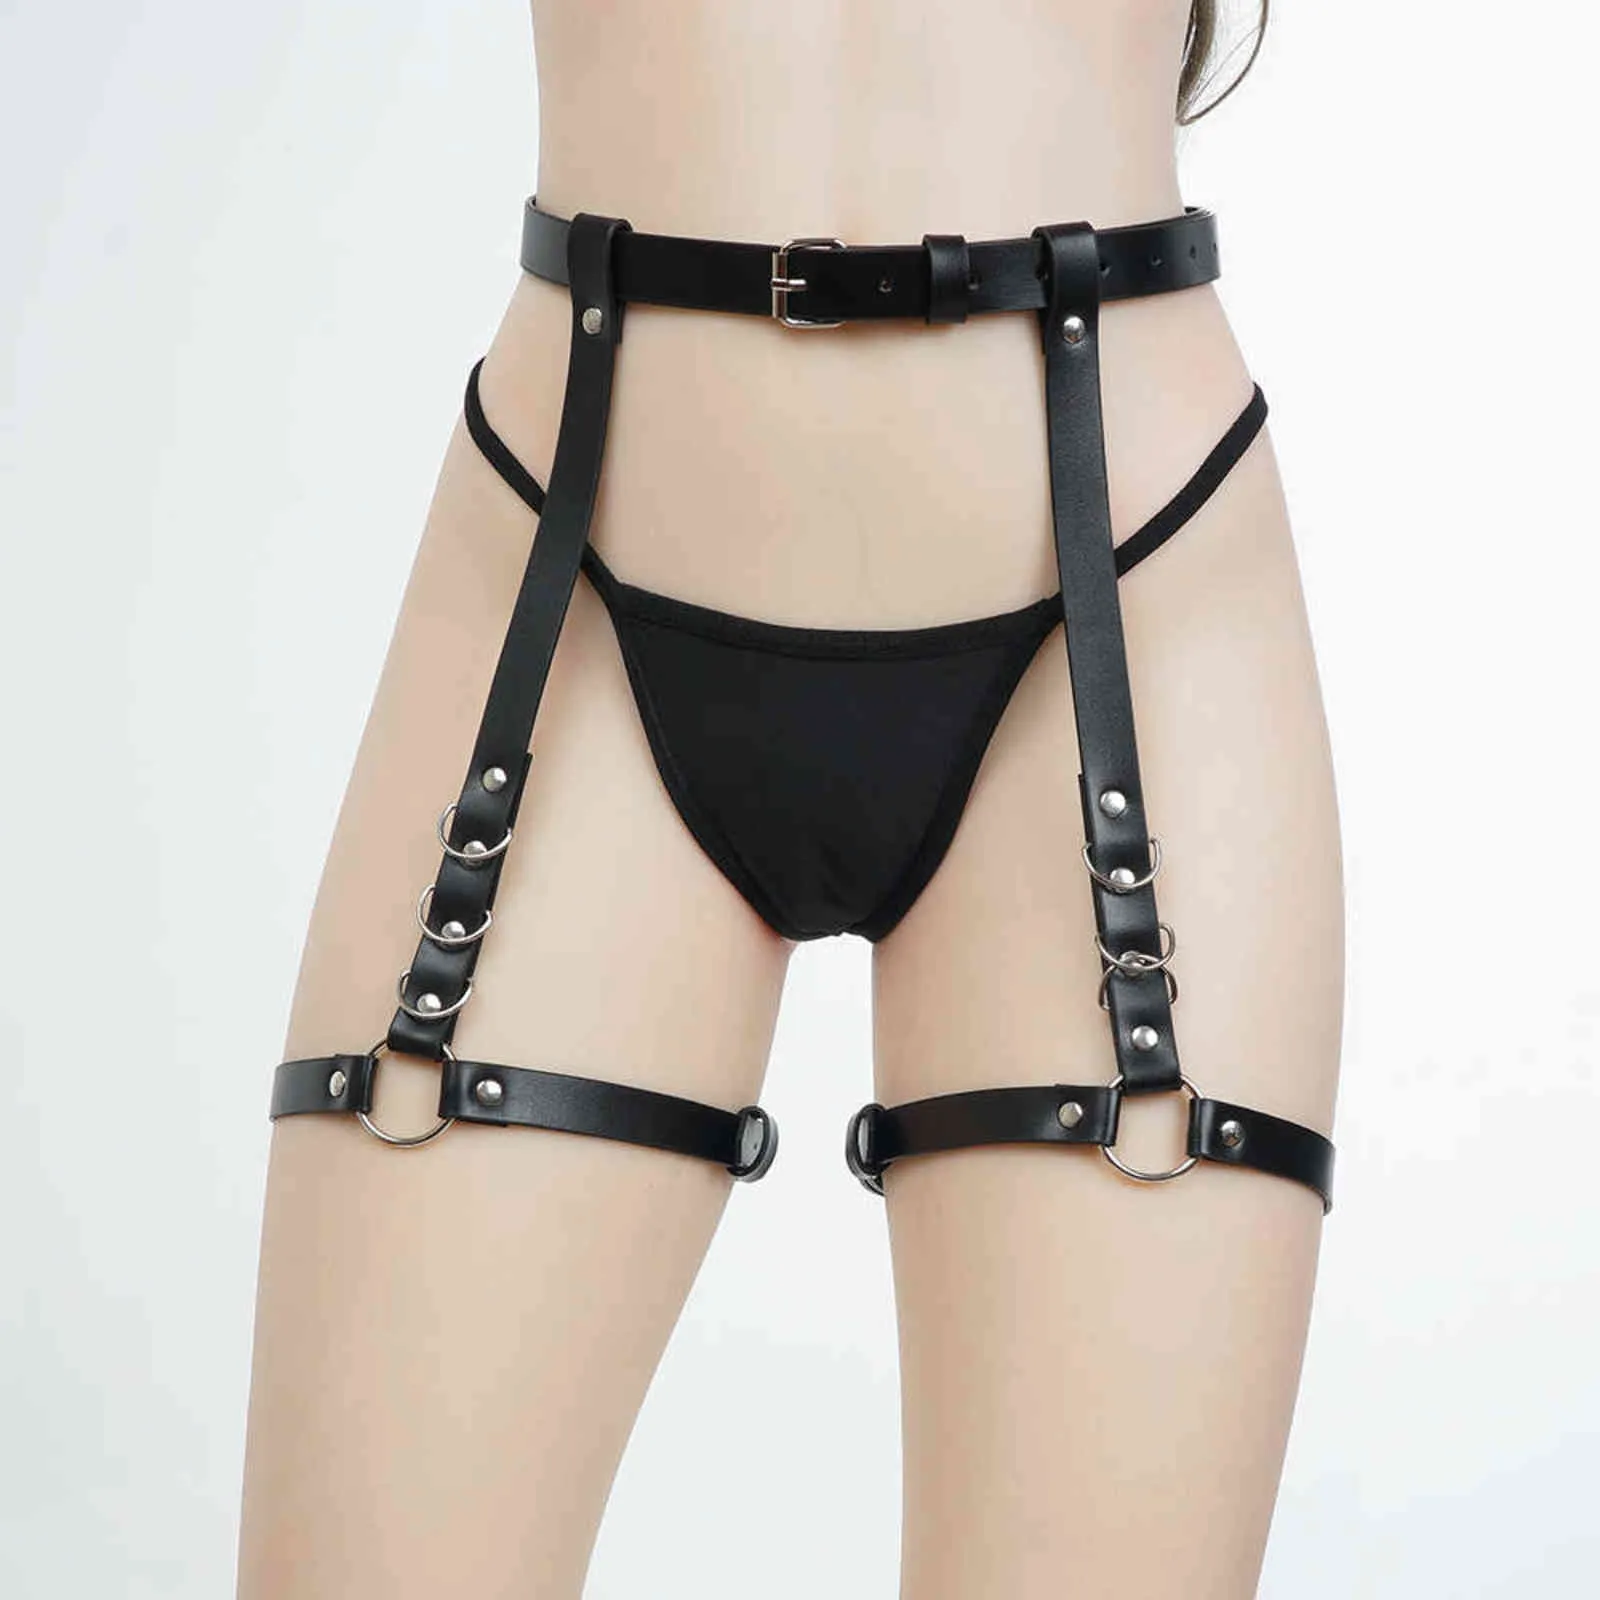 NXY sexy set Women Garter Belt Harness Belts Stockings Erotic Underwear Sexy Lingerie Bondage PU Leather Leg Strap Lady Suspender BDSM GN017 1127